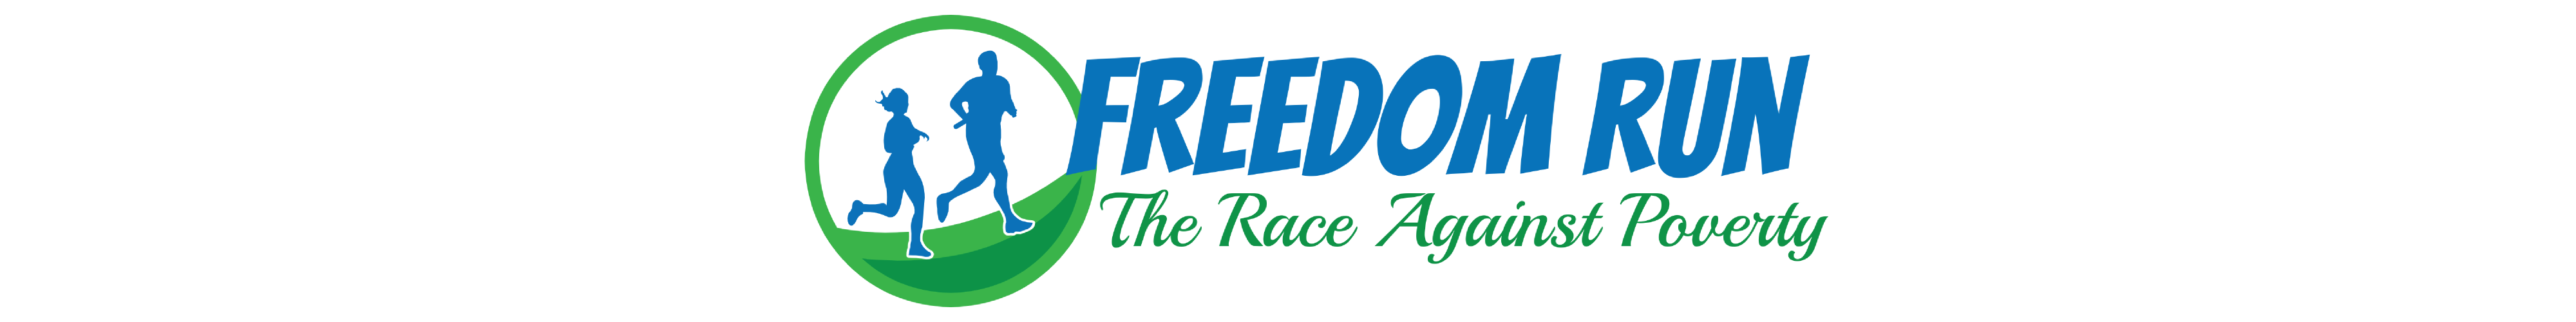 freedom run logo image